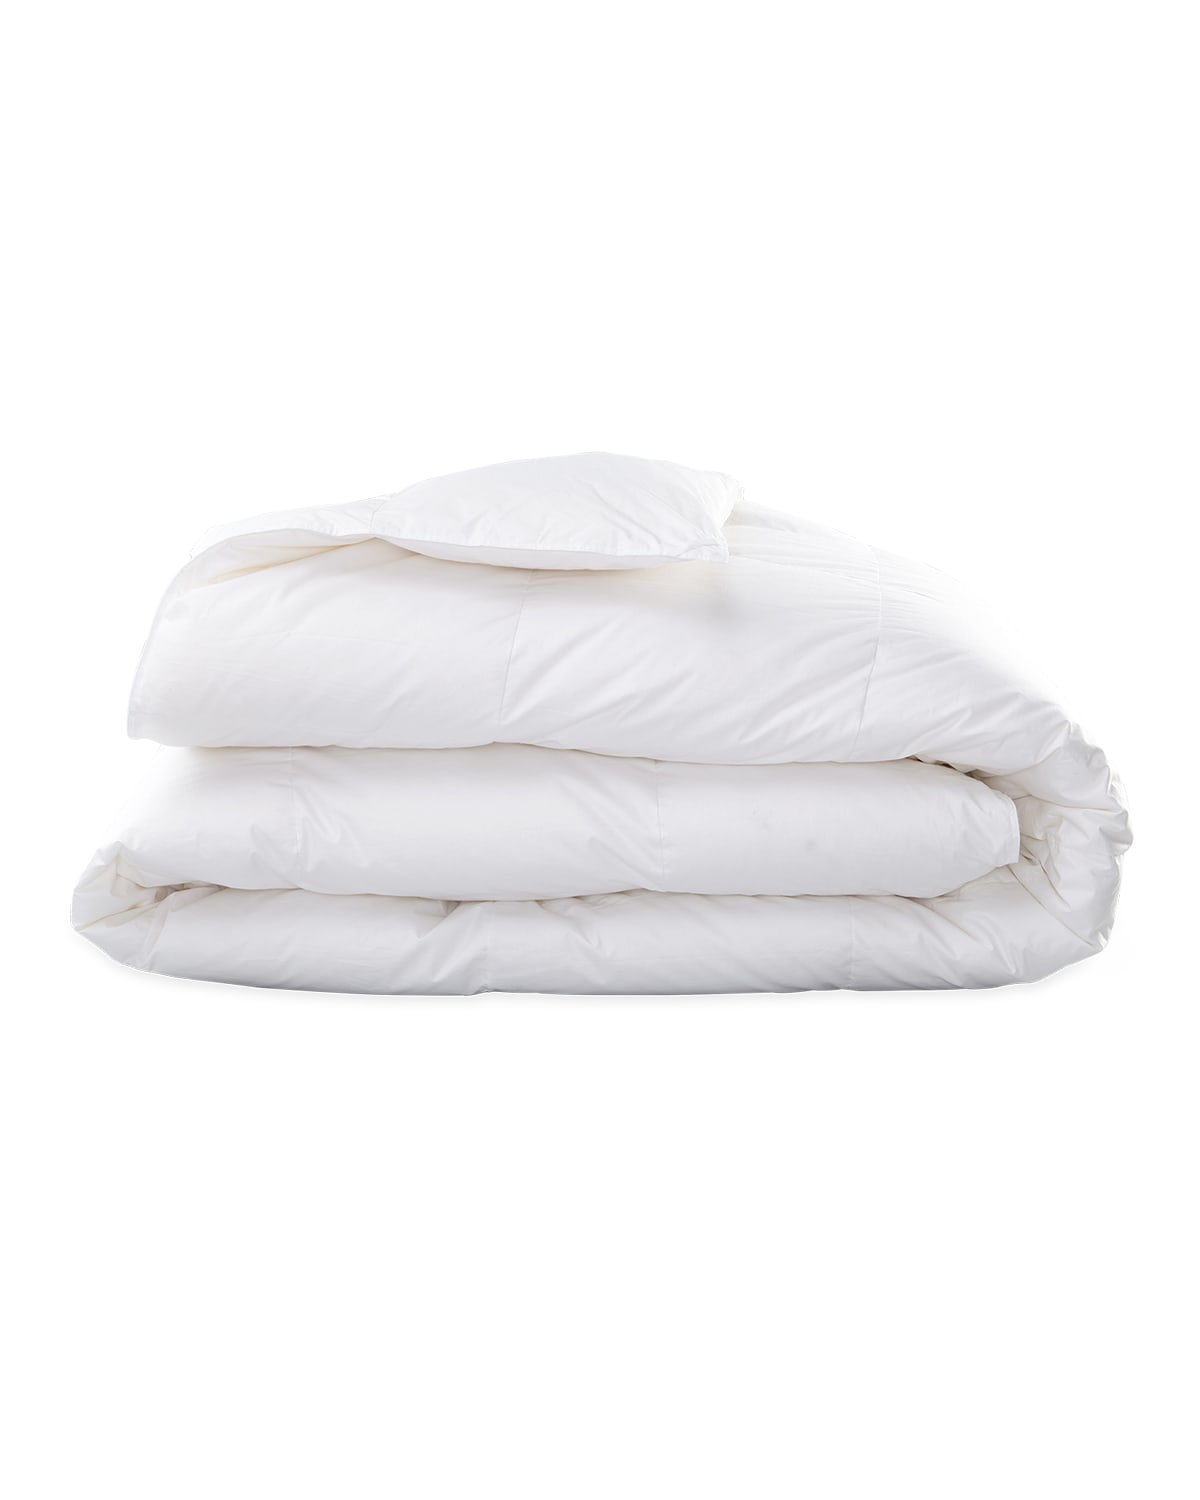 Matouk Valetto Summer Twin Comforter In White